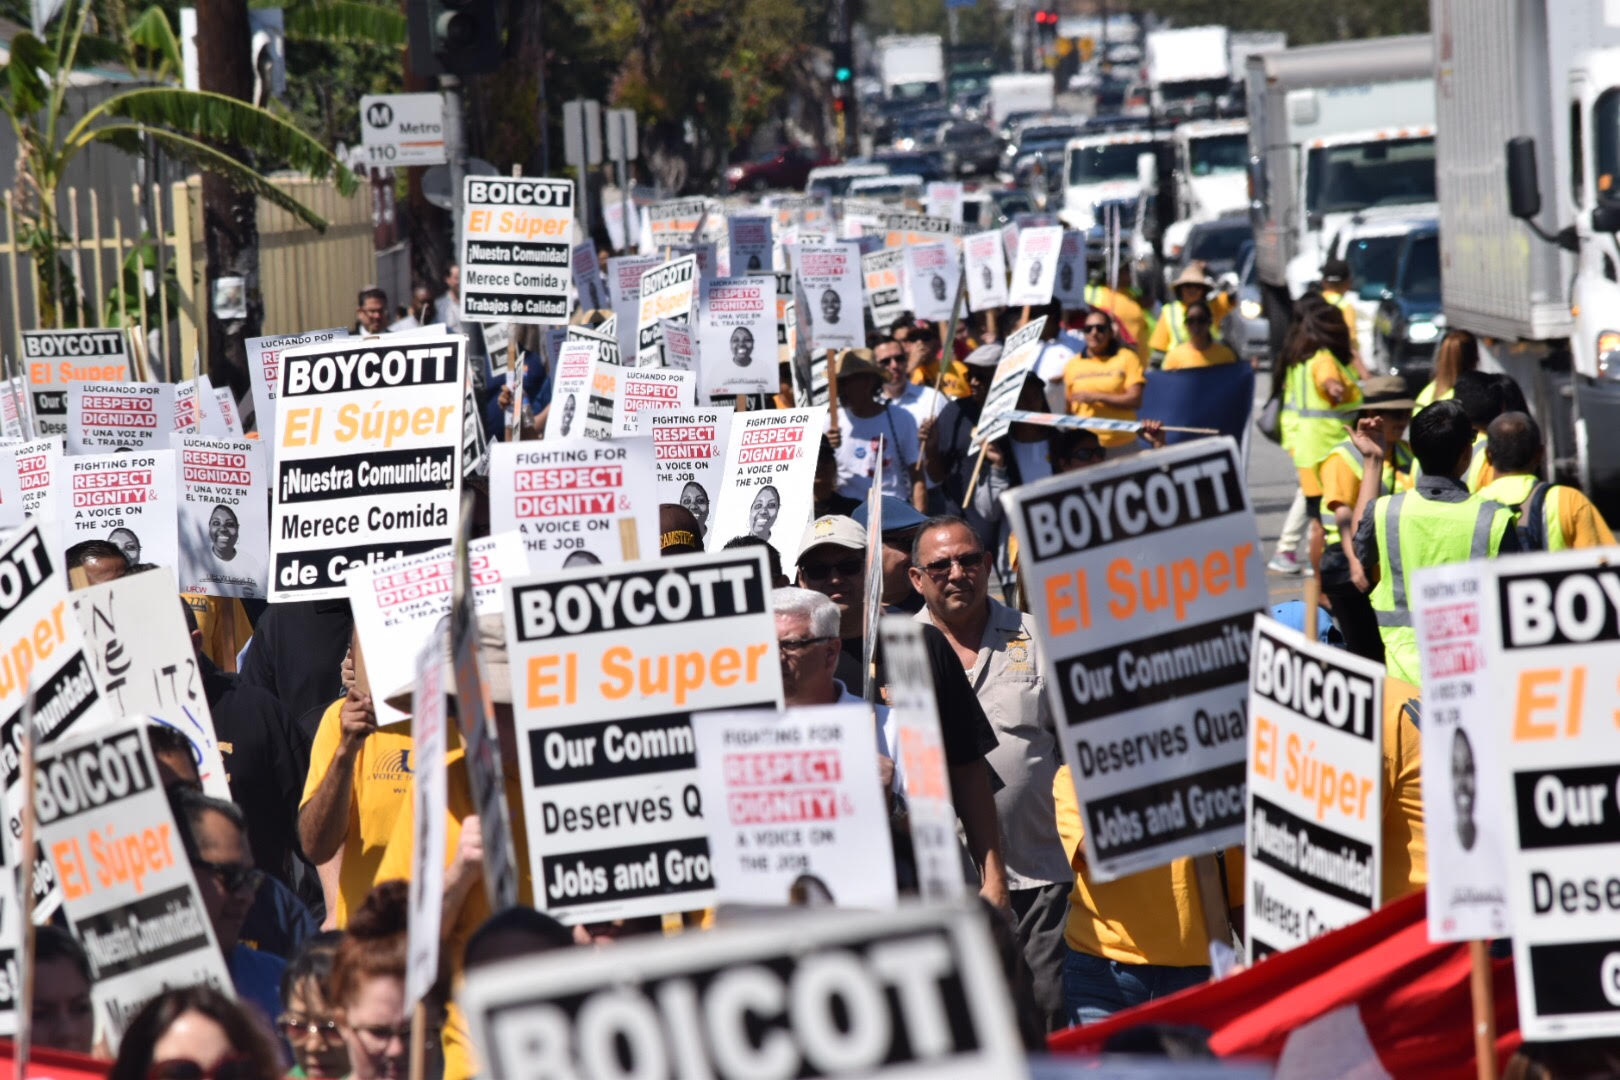 Crowd carries "Boycott El Super" signs